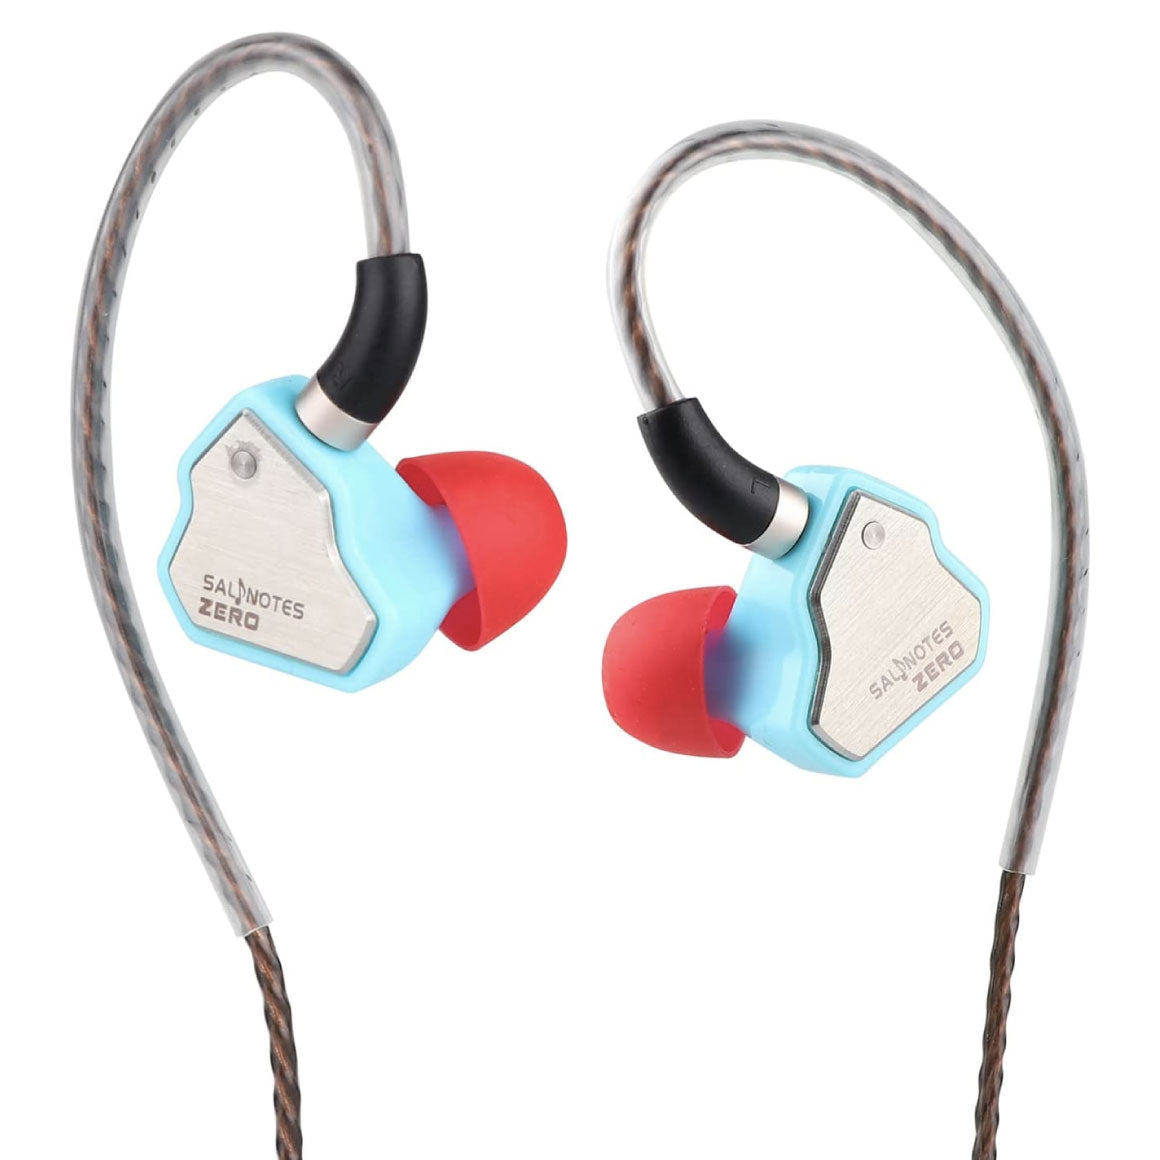 Headphone-Zone-7HZ-Salnotes-Zer0-3.5mm-with-mic-blue